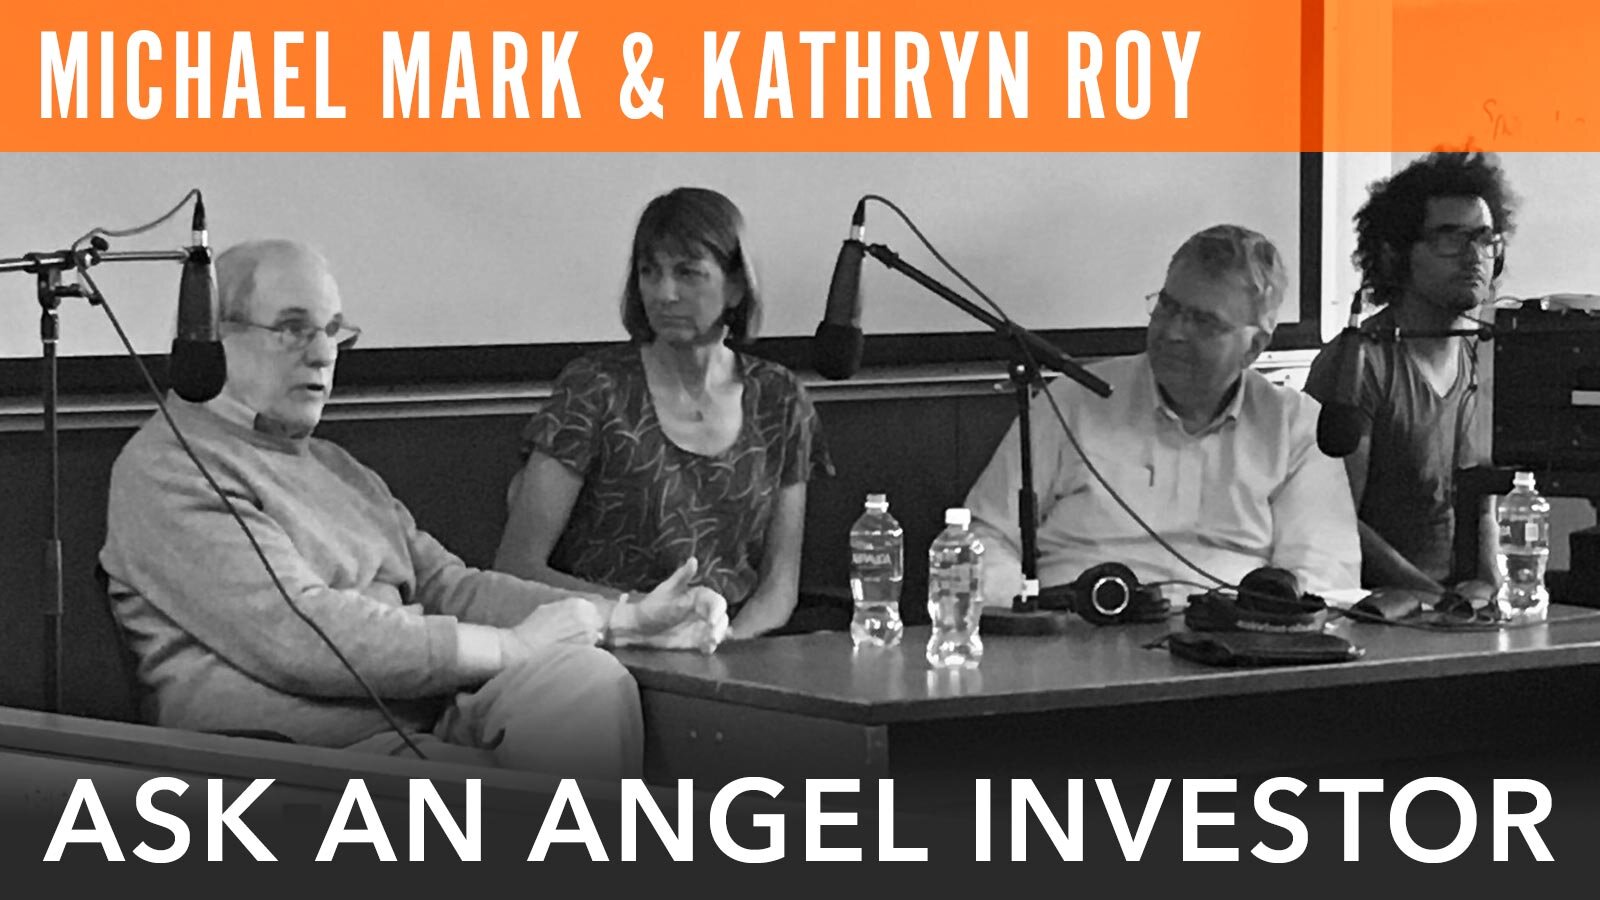 Michael Mark & Kathryn Roy, "Ask an Angel Investor I"